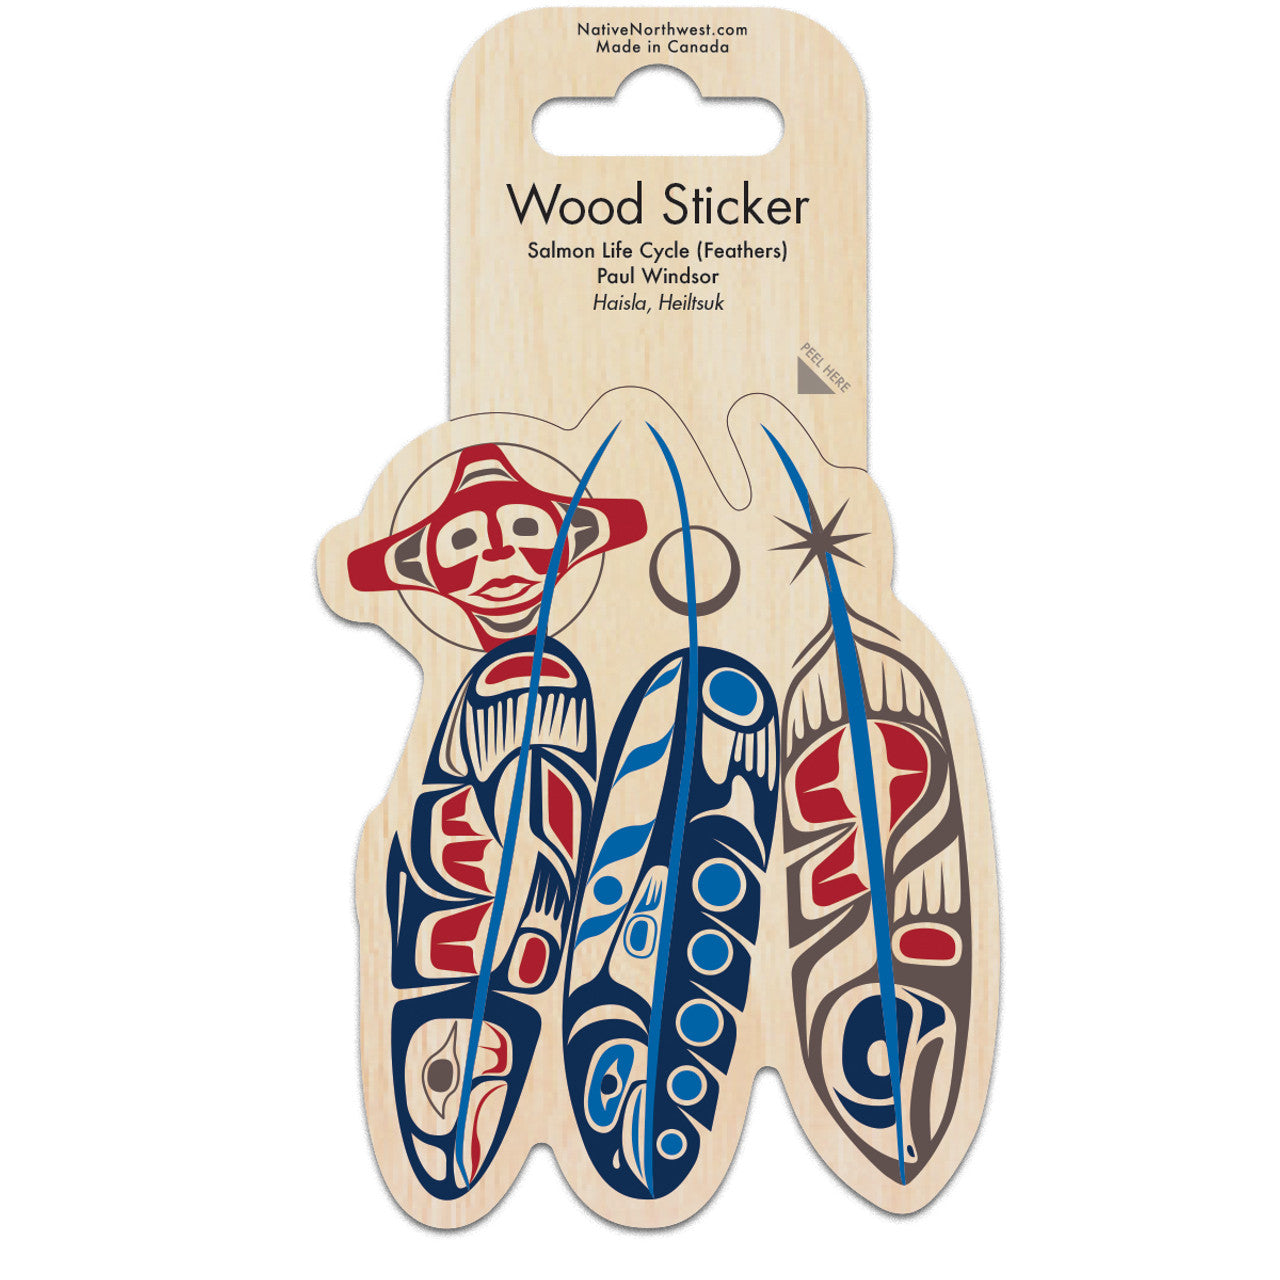 Wood Sticker Paul Windsor Salmon Life cycle